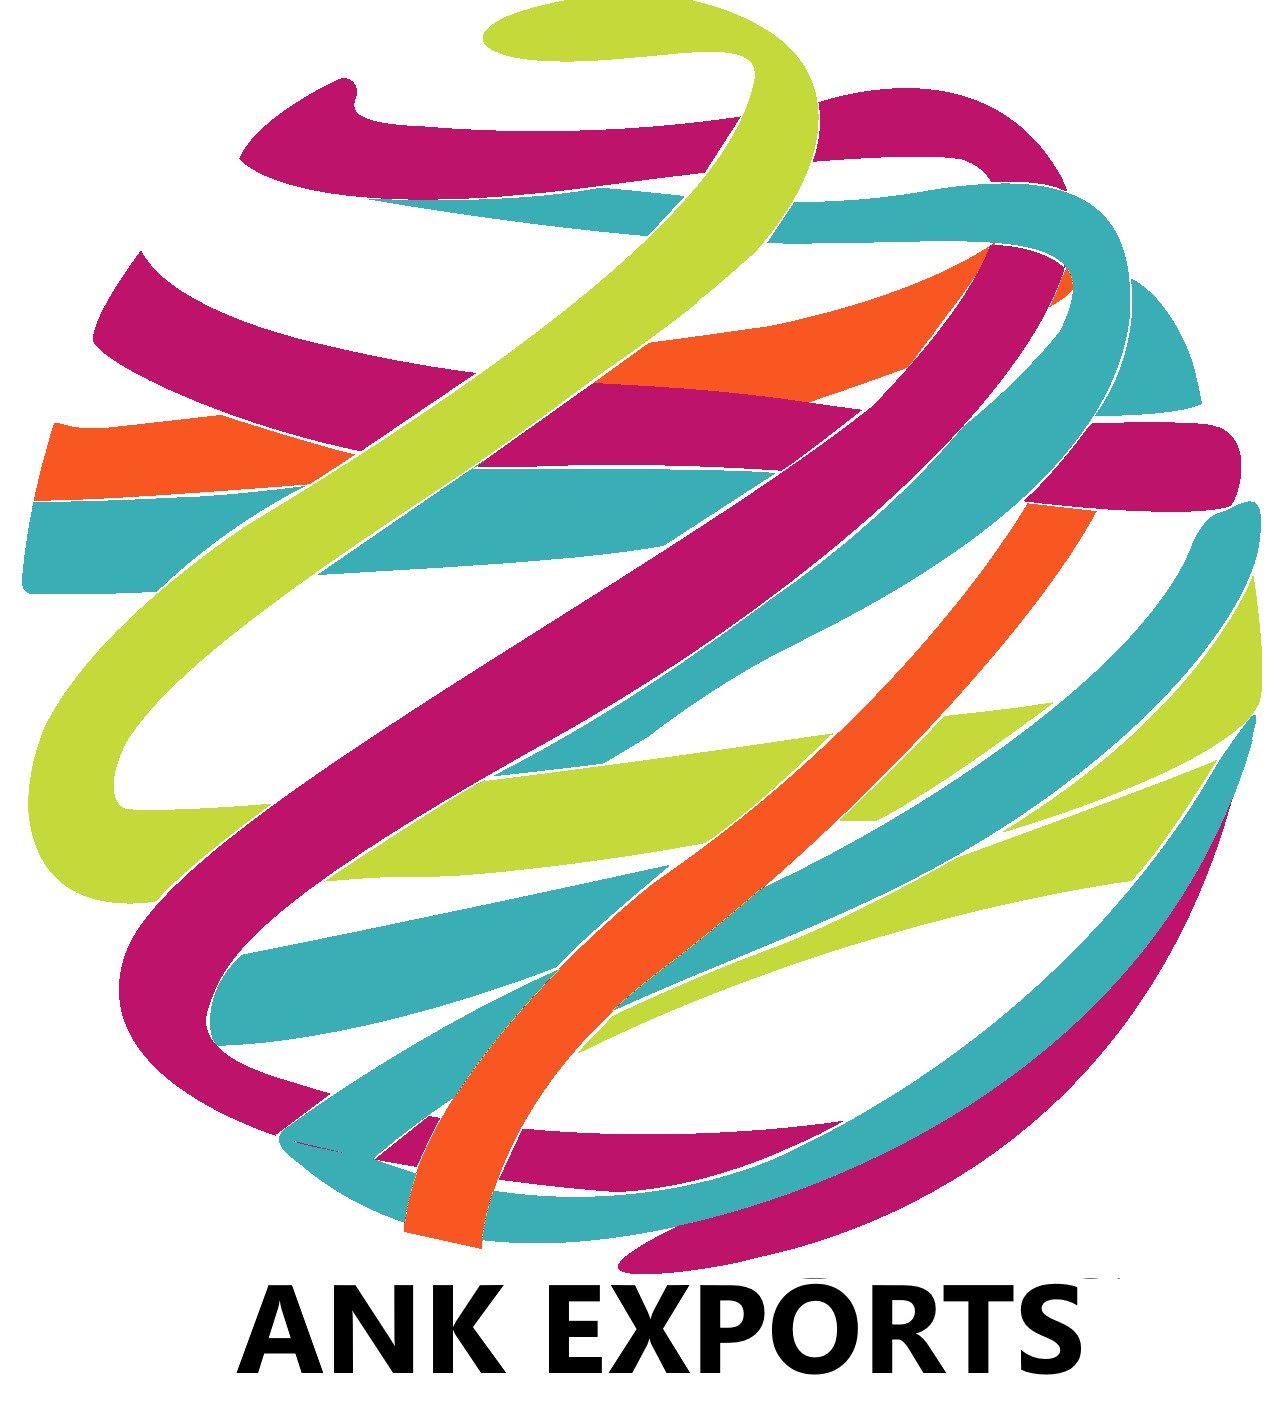 ANK EXPORTS